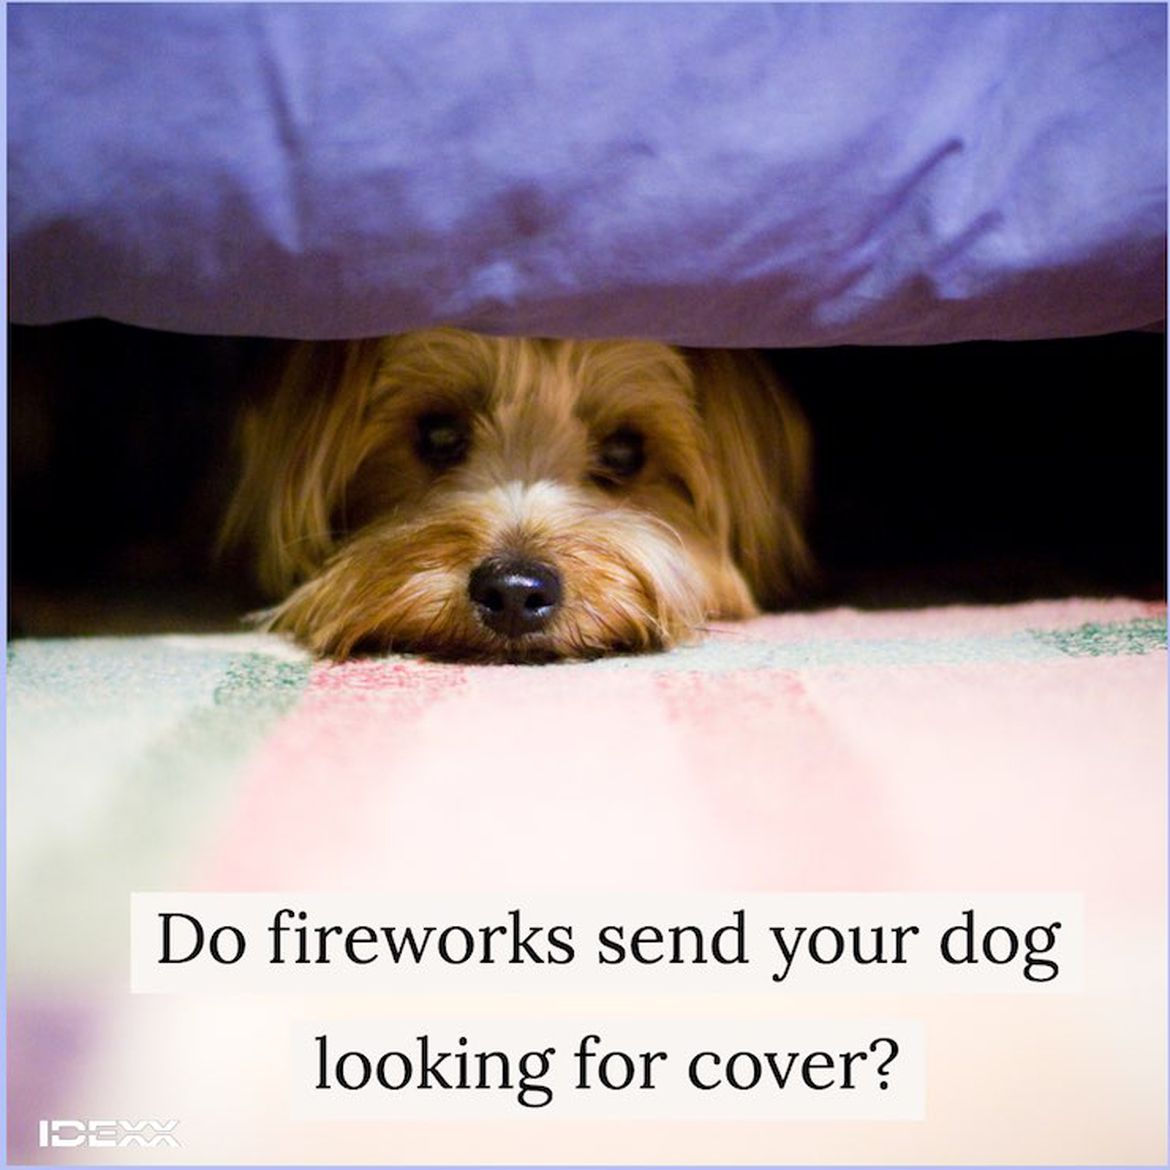 Dog hiding under bed afraid of 4th of July fireworks